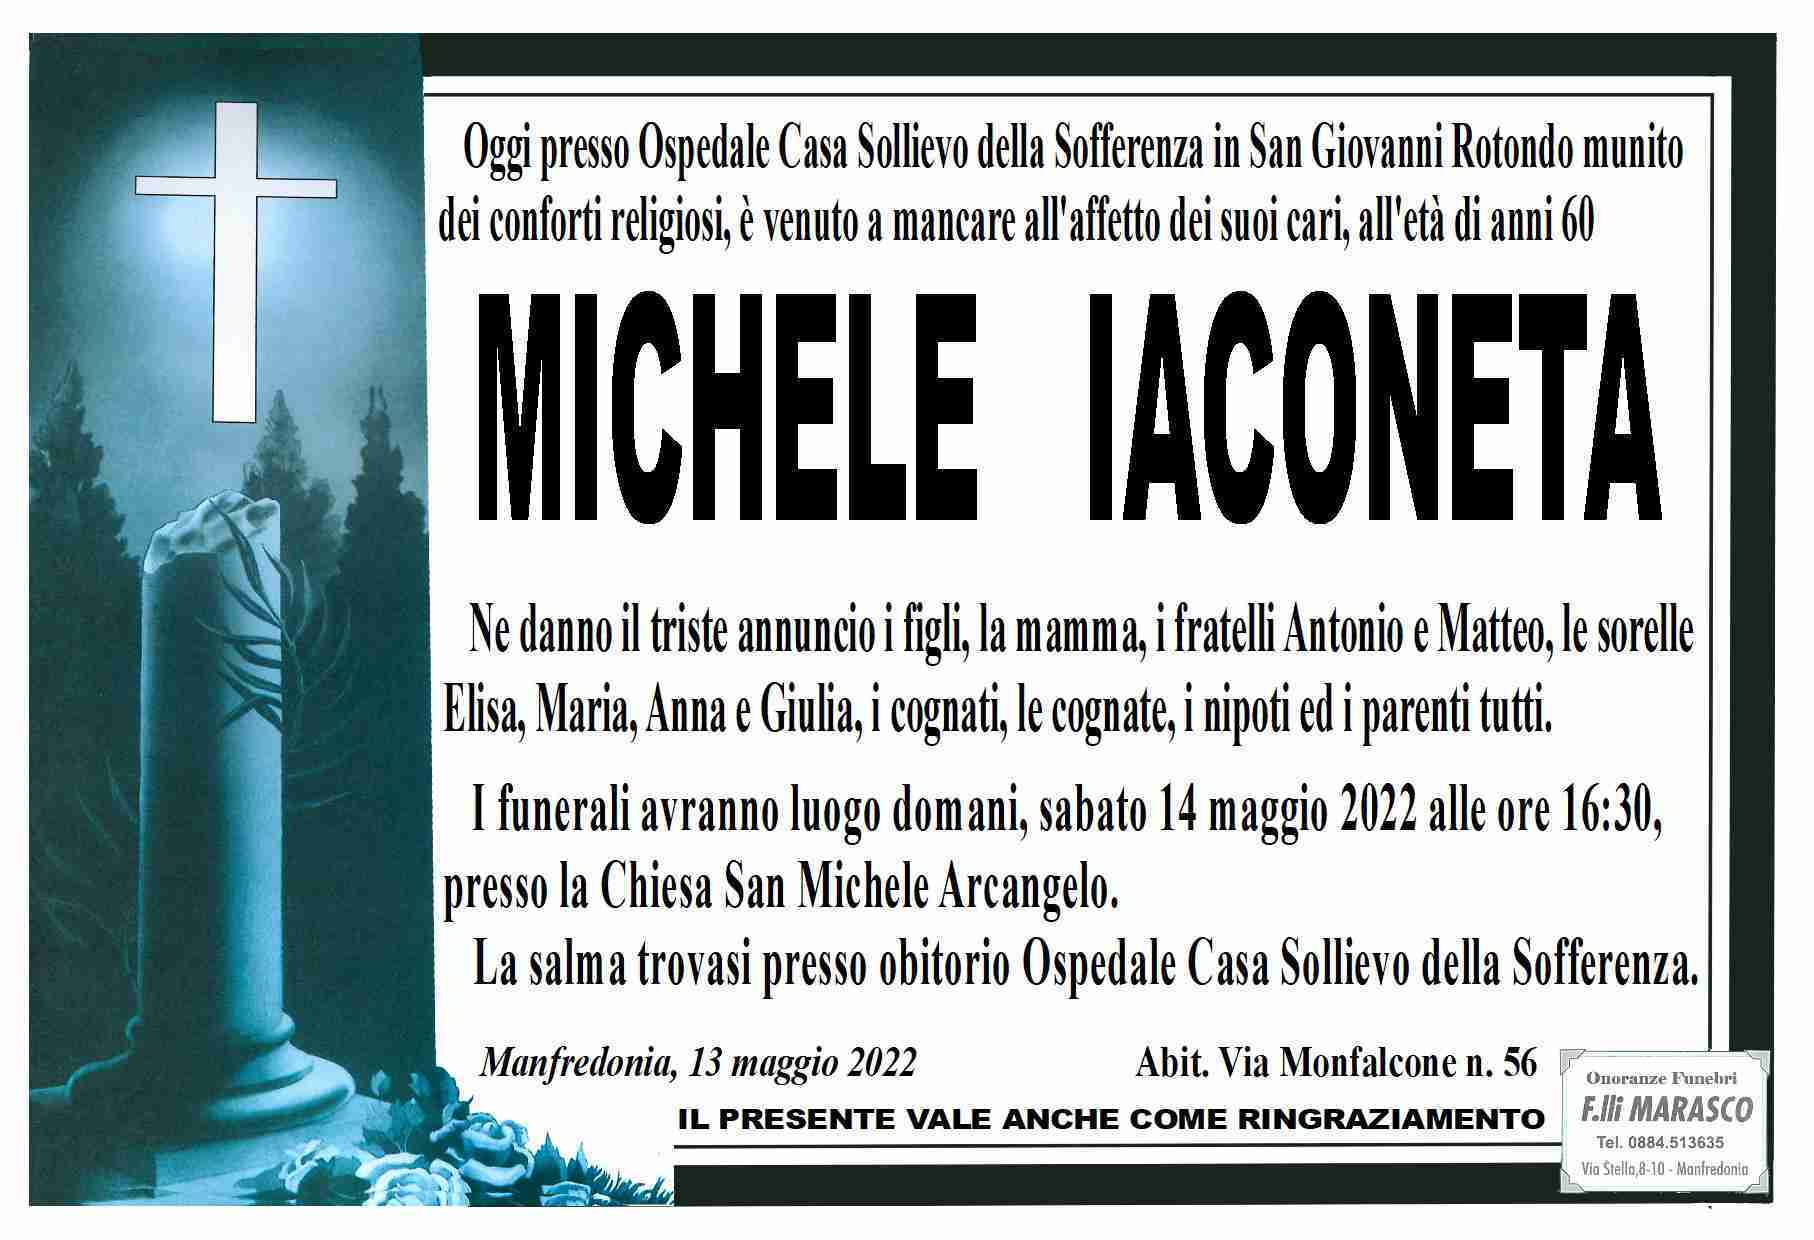 Michele Iaconeta